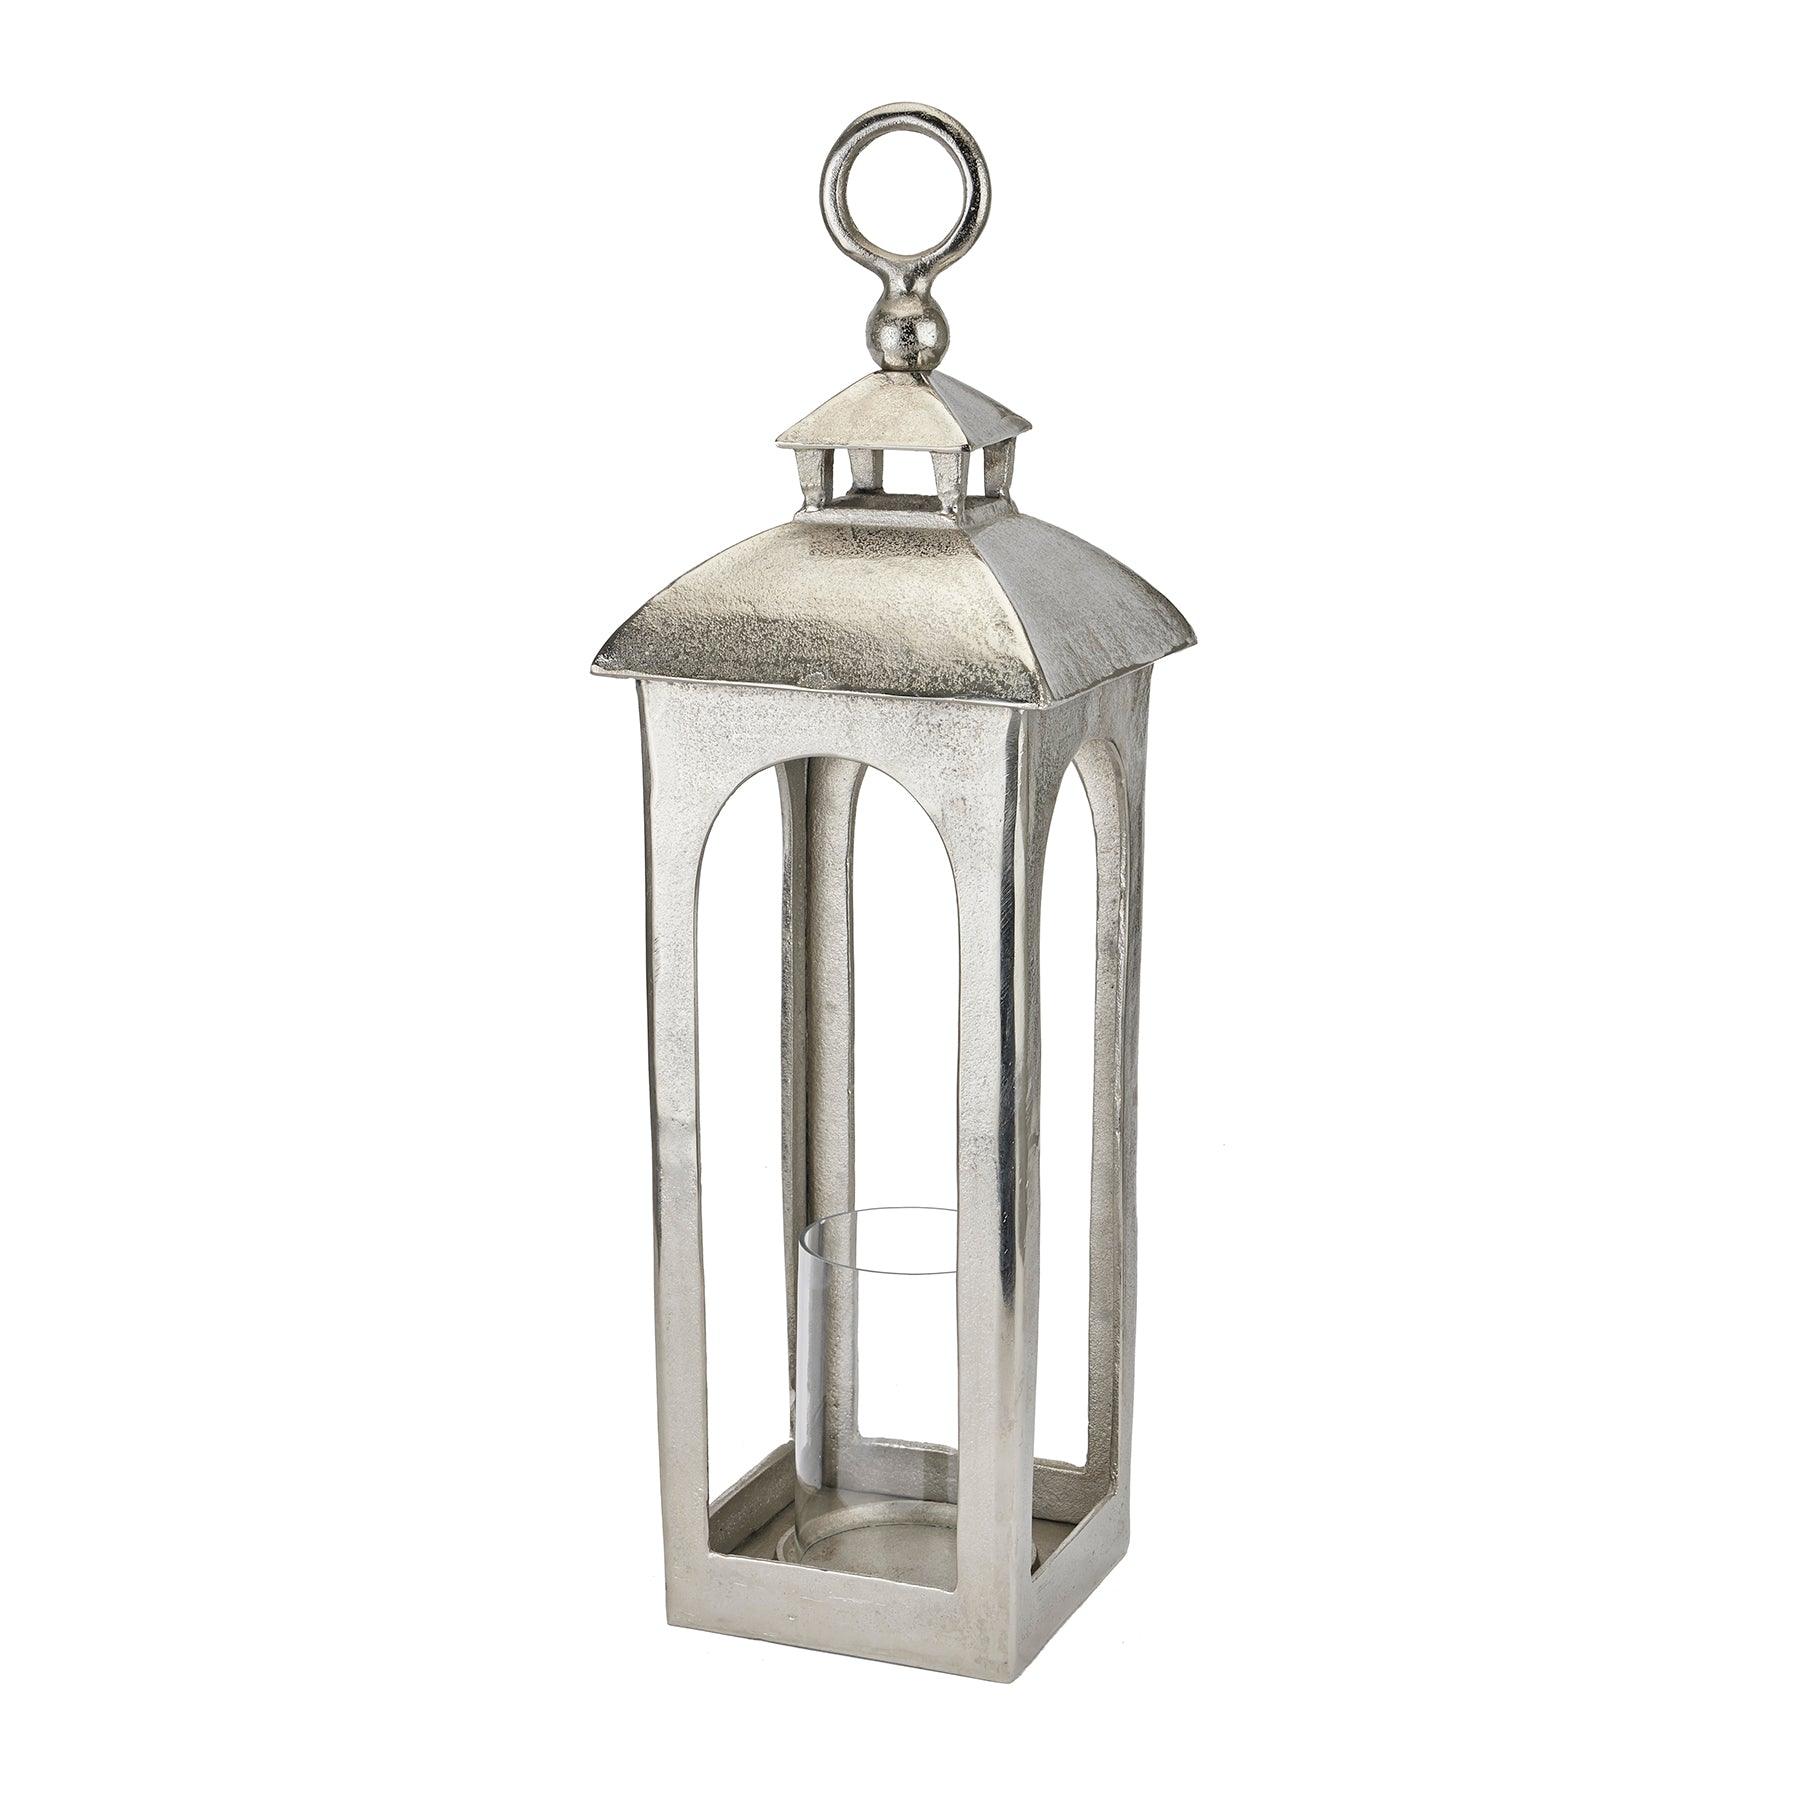 Farrah Collection Cast Aluminium Loop Top Lantern - £129.95 - Lighting > Lanterns > Lighting 